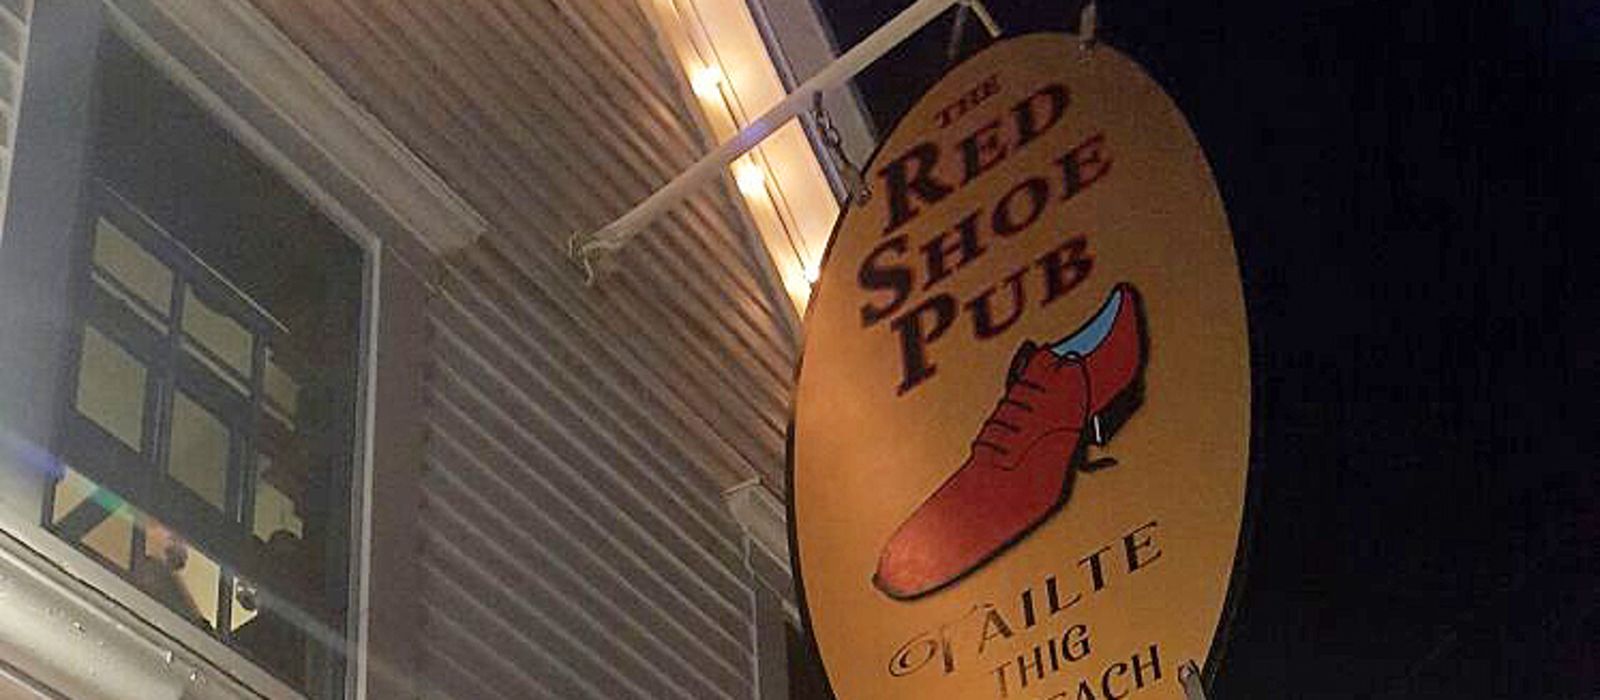 The Red Shoe Pub, Mabou, Nova Scotia